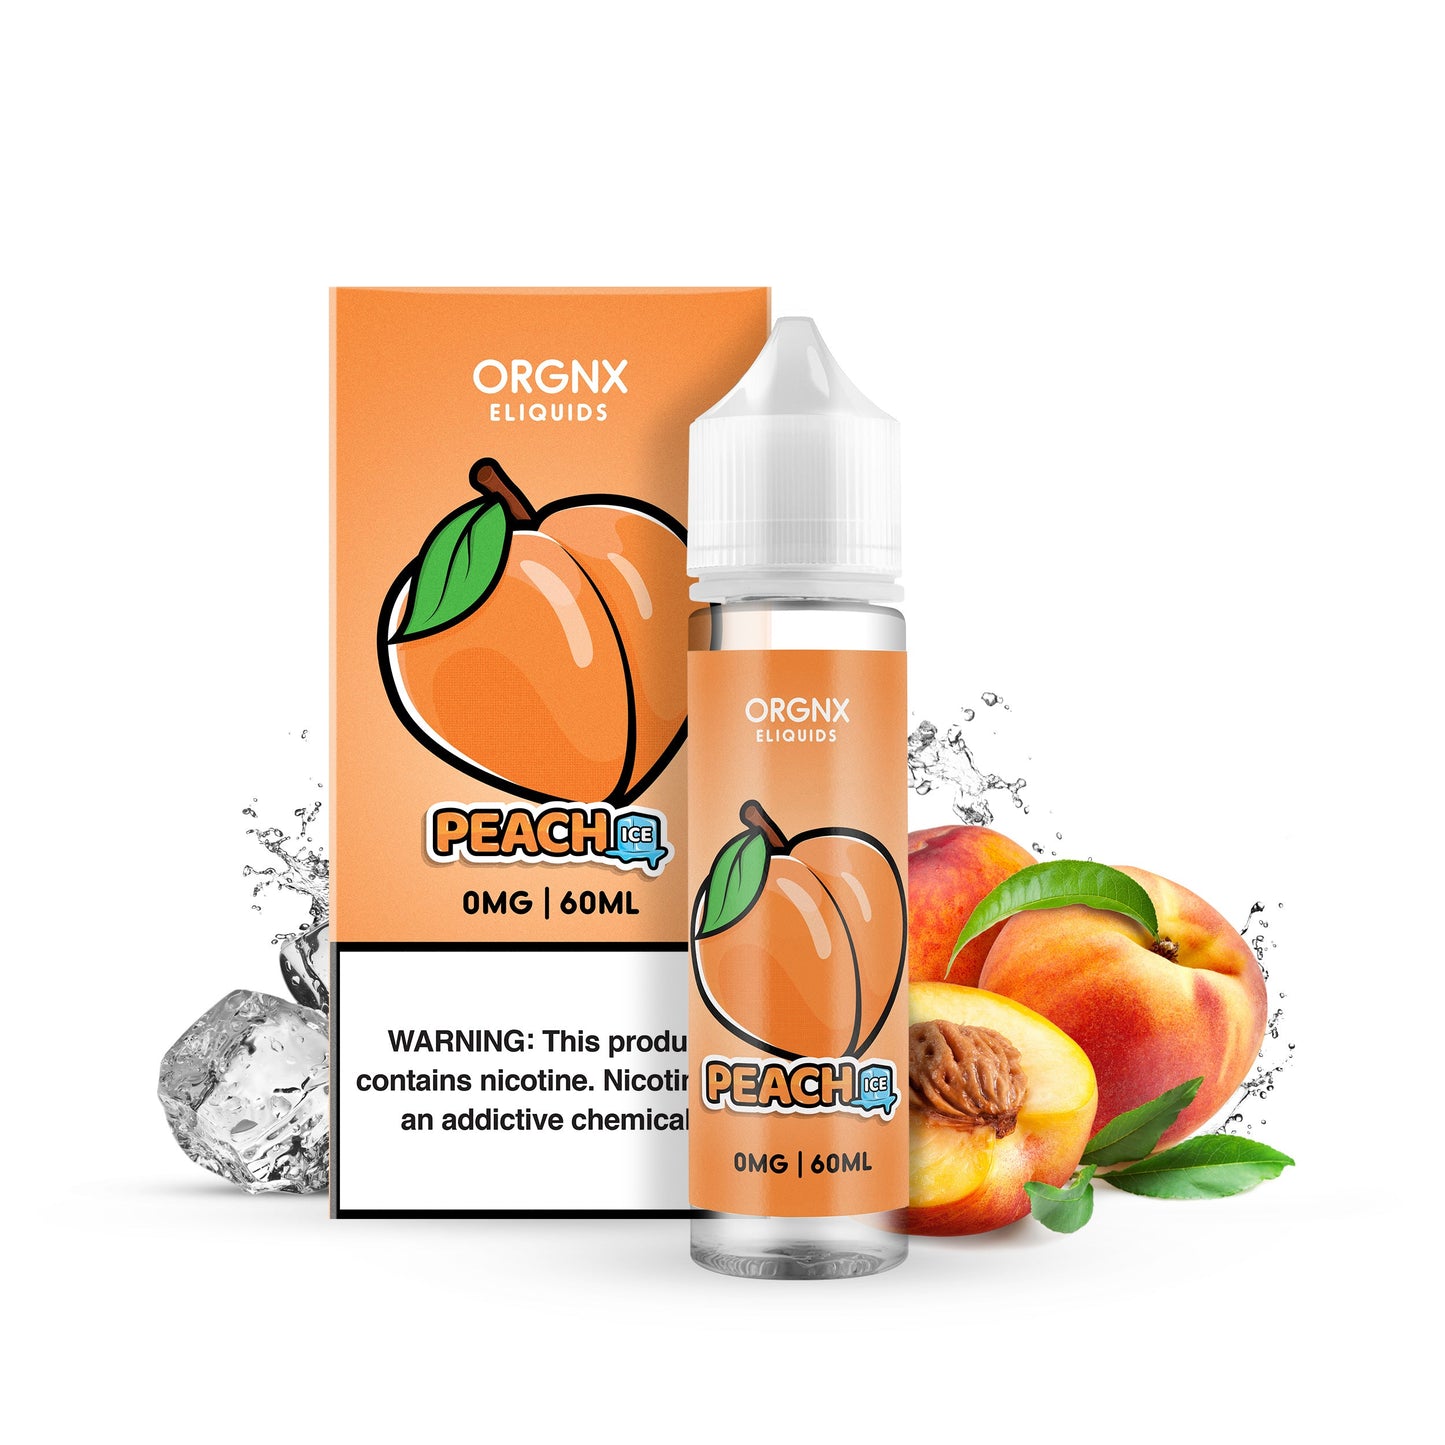 ORGNX Eliquids Peach Ice (60ml)